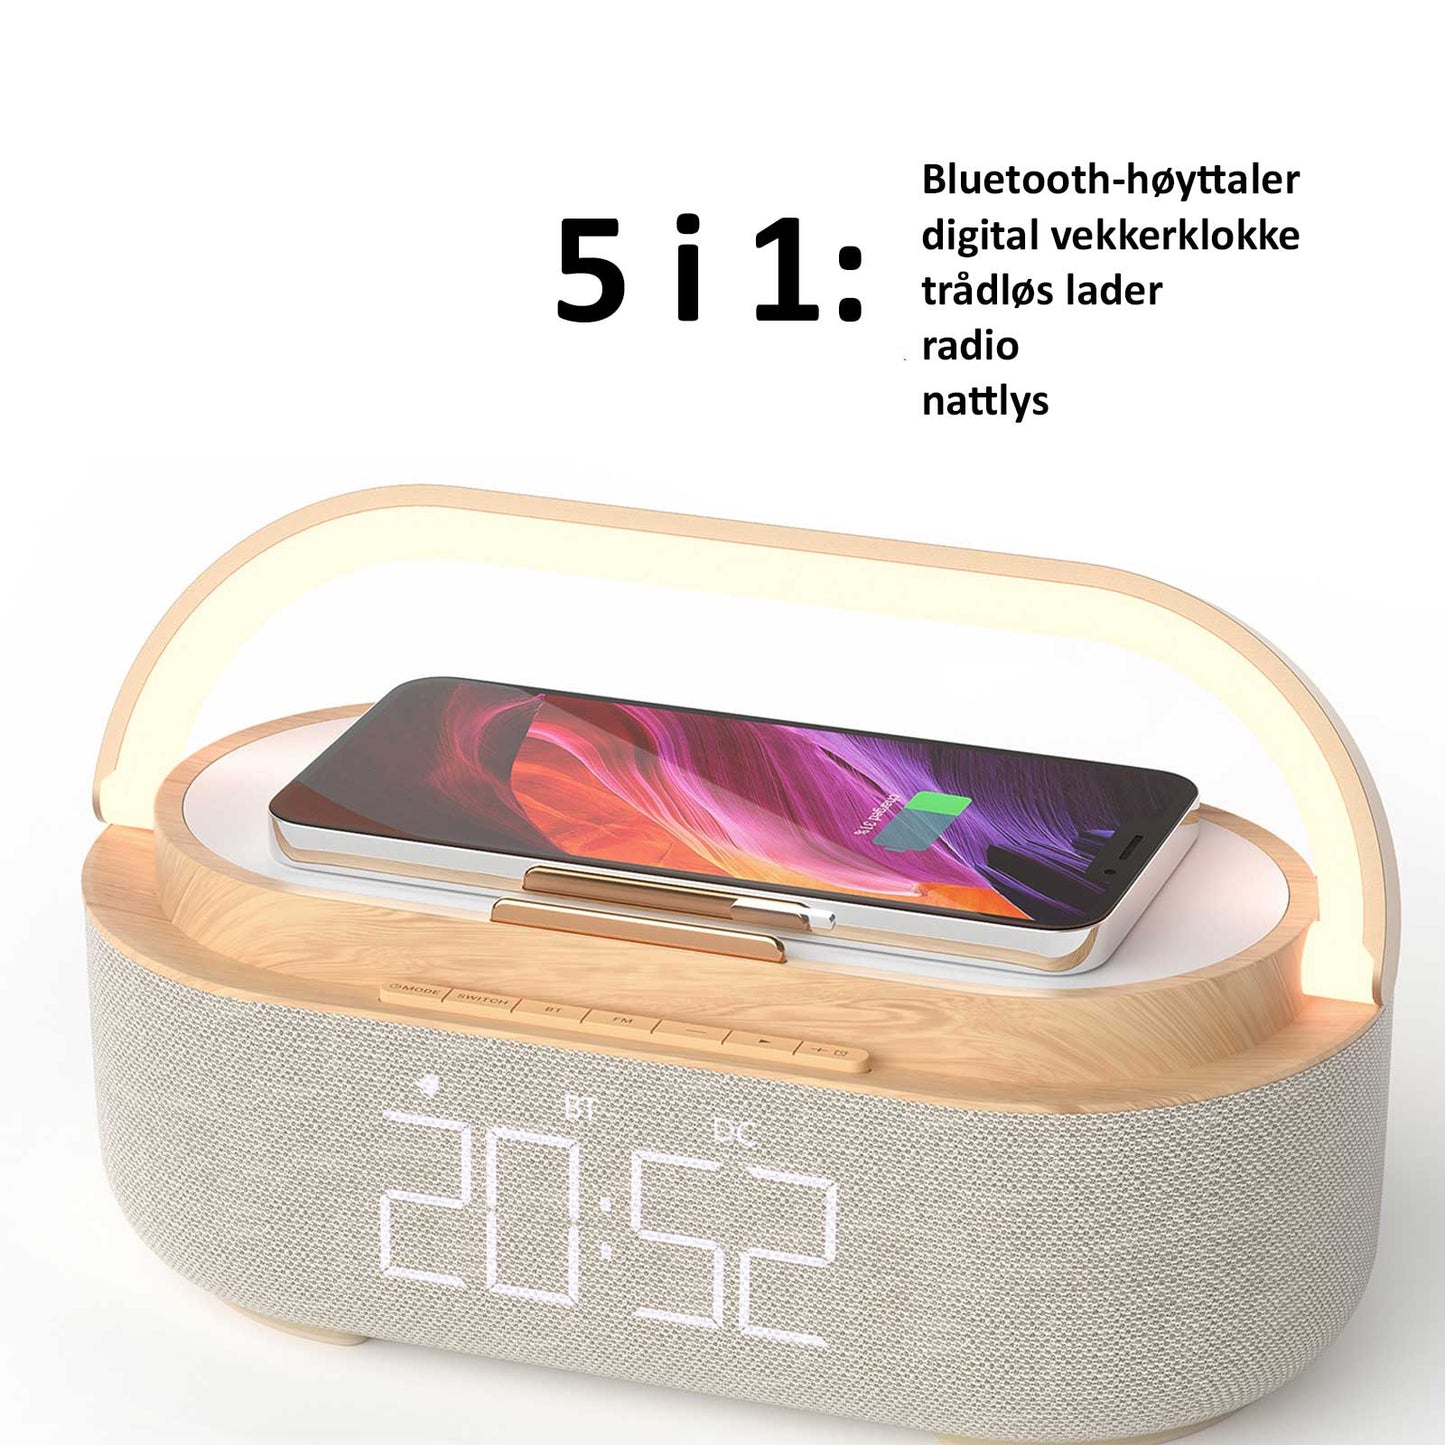 5 i 1: Bluetooth-høyttaler, digital vekkerklokke, trådløs lader, radio, nattlys